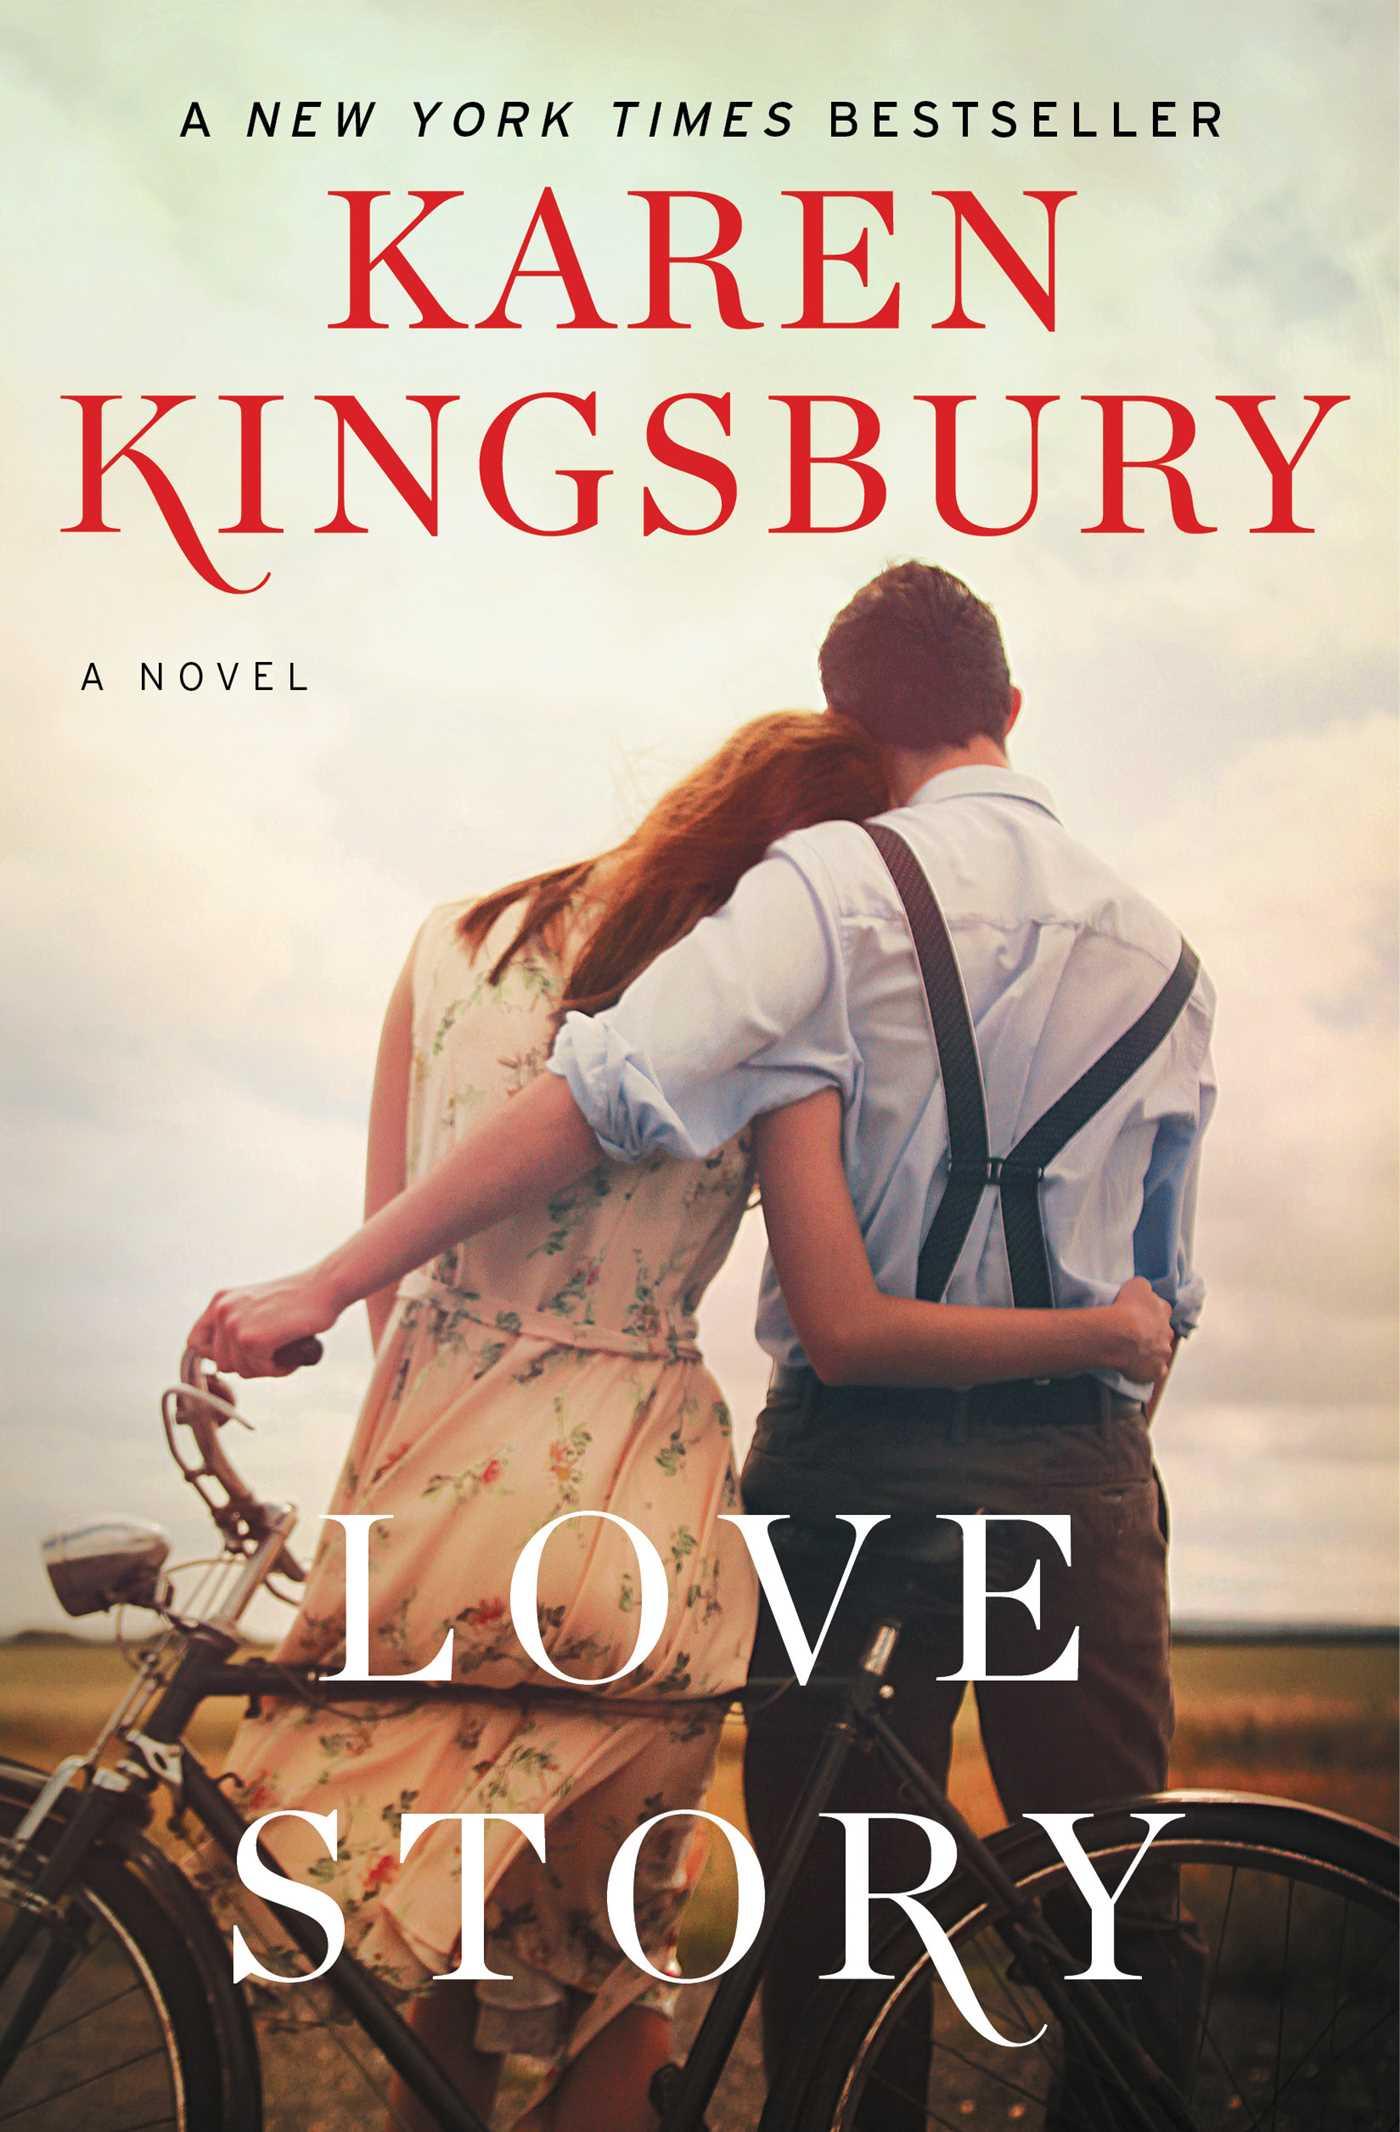 Love Story - Kingsbury, Karen